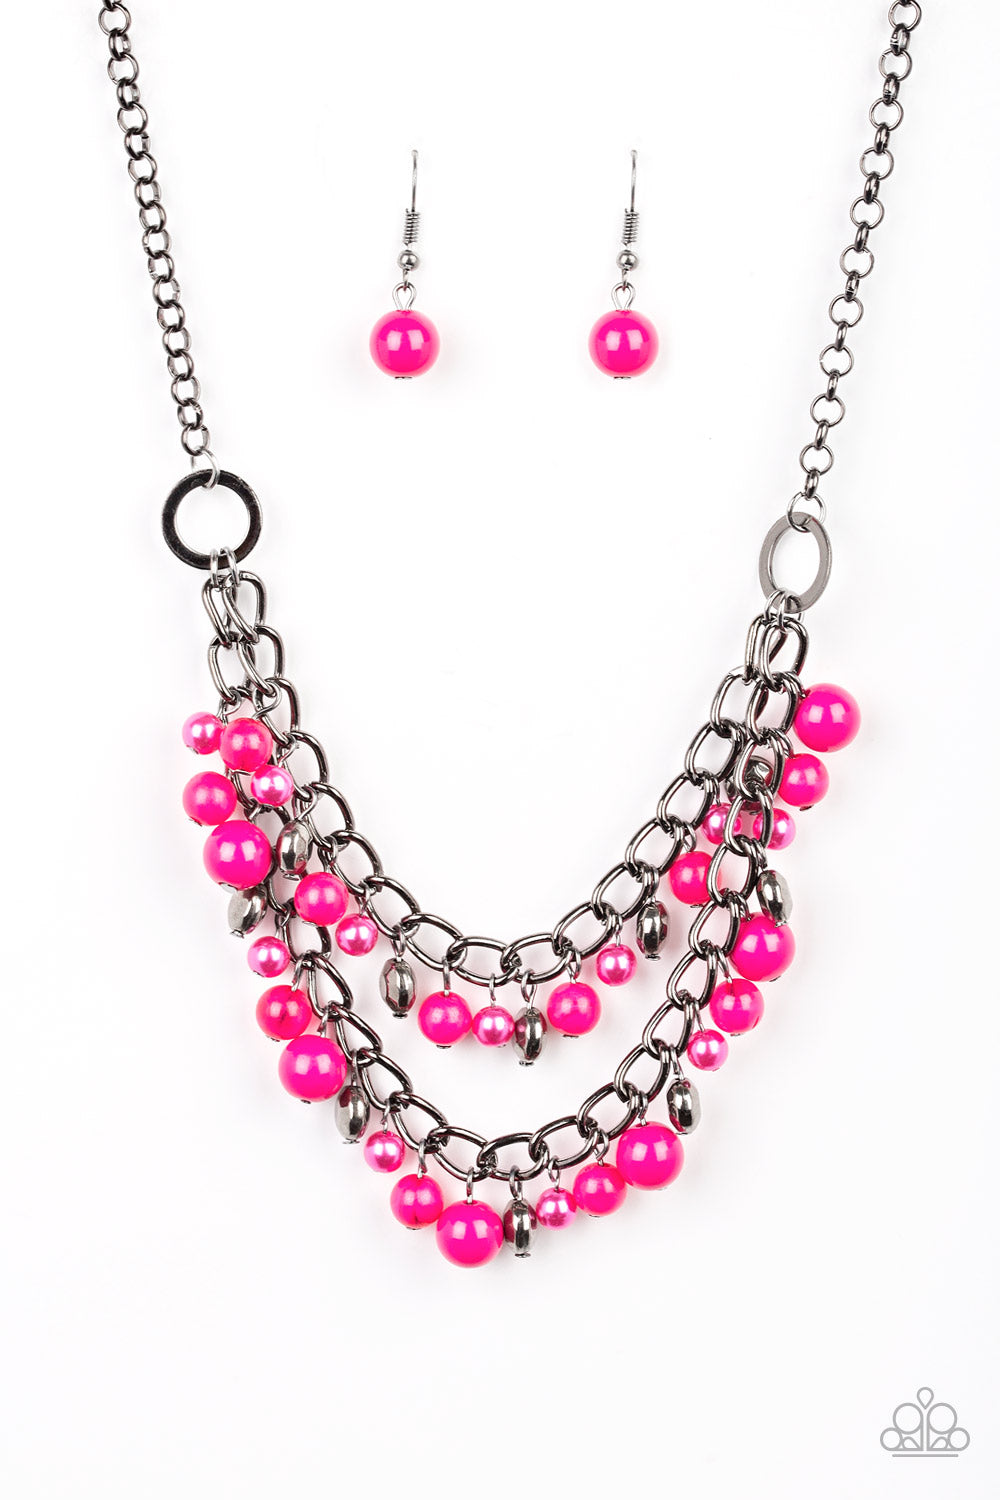 Watch Me Now Pink Paparazzi Necklaces Cashmere Pink Jewels - Cashmere Pink Jewels & Accessories, Cashmere Pink Jewels & Accessories - Paparazzi